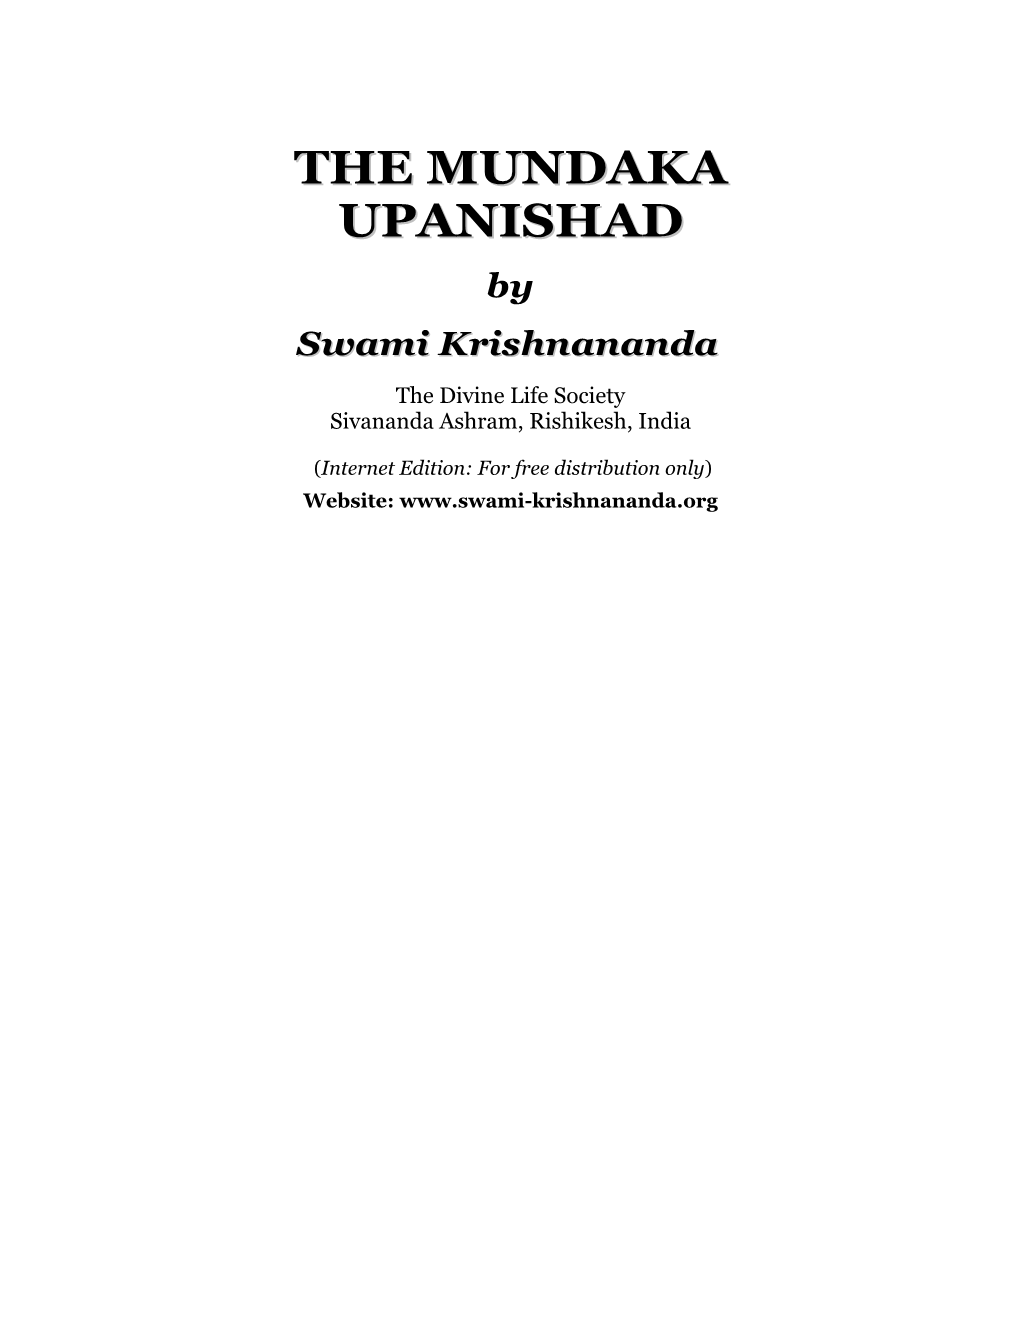 The Mundaka Upanishadupanishad Byby Swami Swami Krishnananda Krishnananda 21 FOREWORD